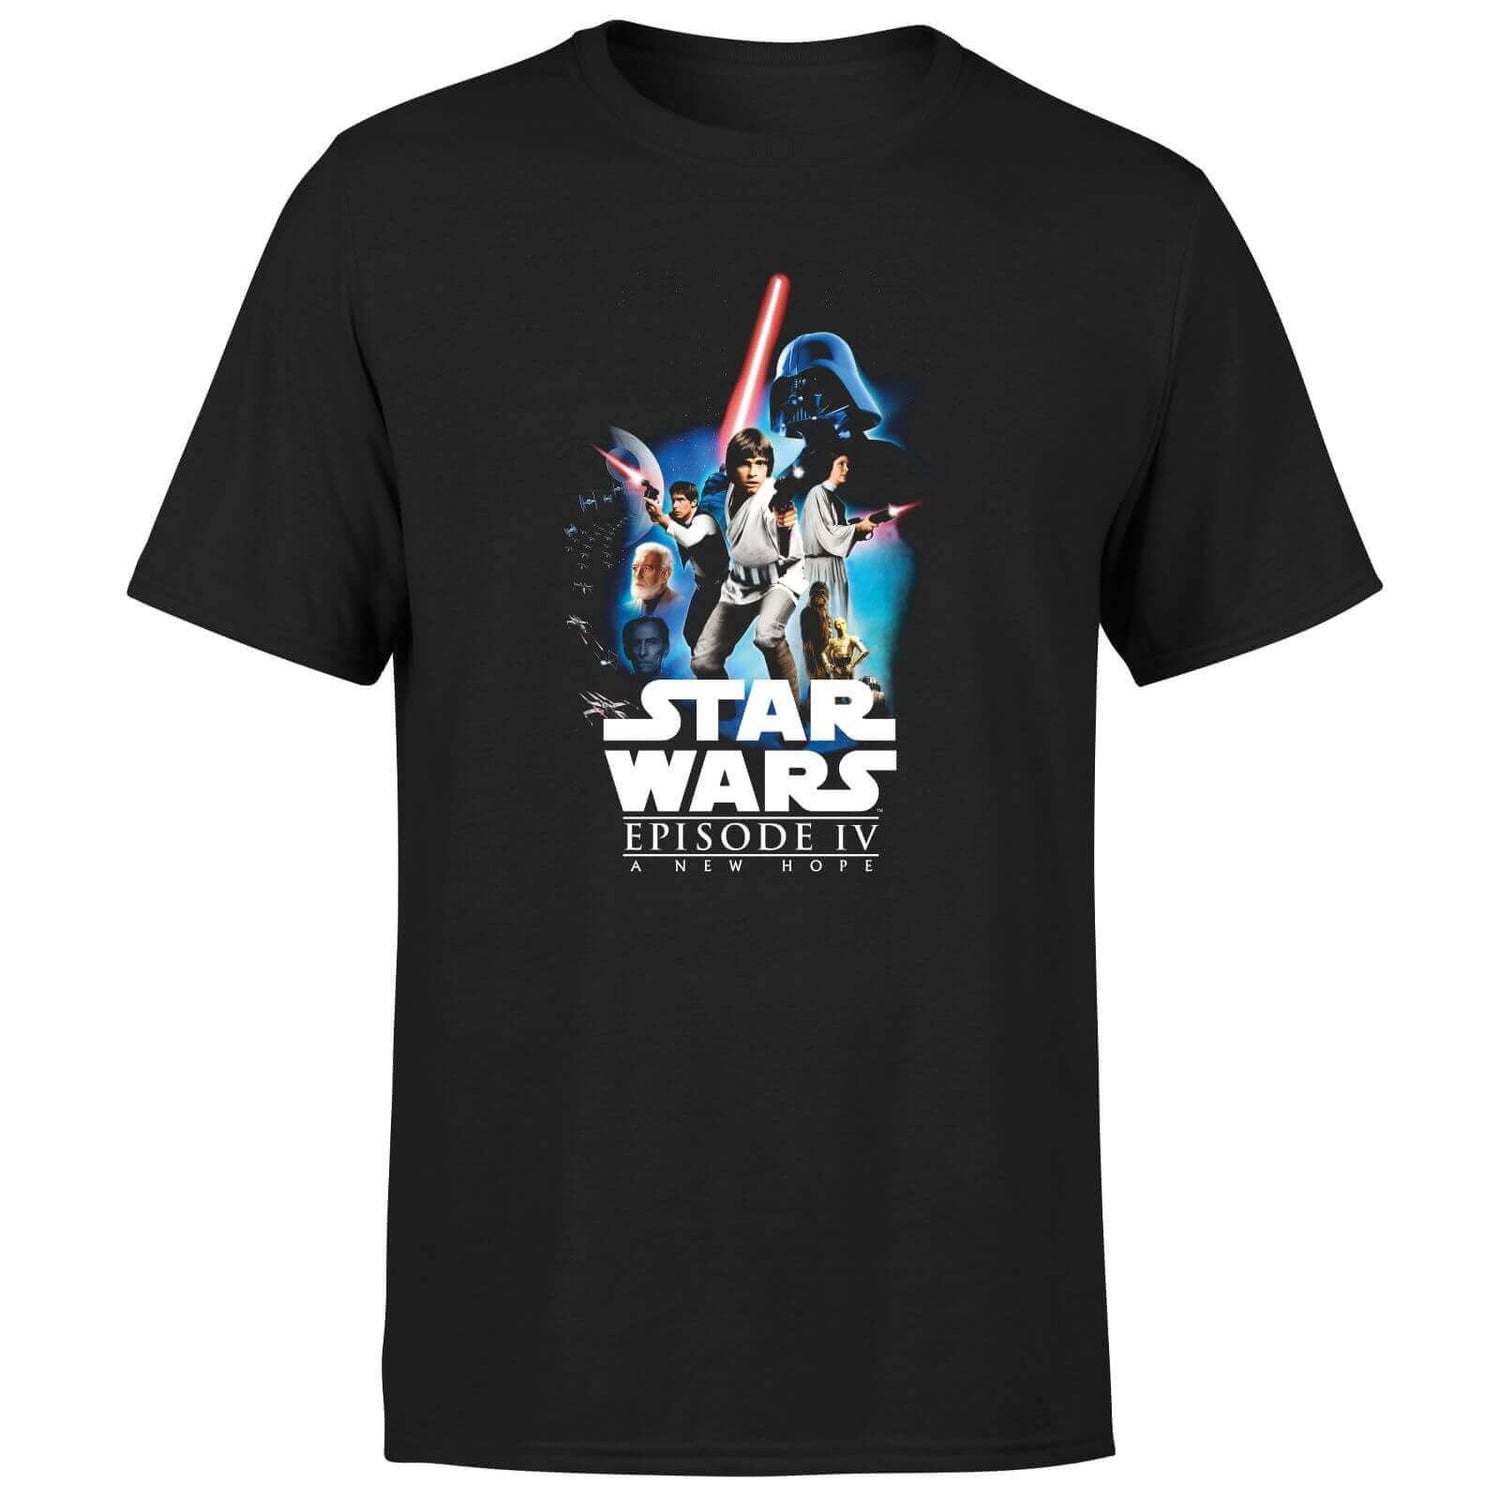 Camiseta unisex A New Hope de Star Wars - Negro